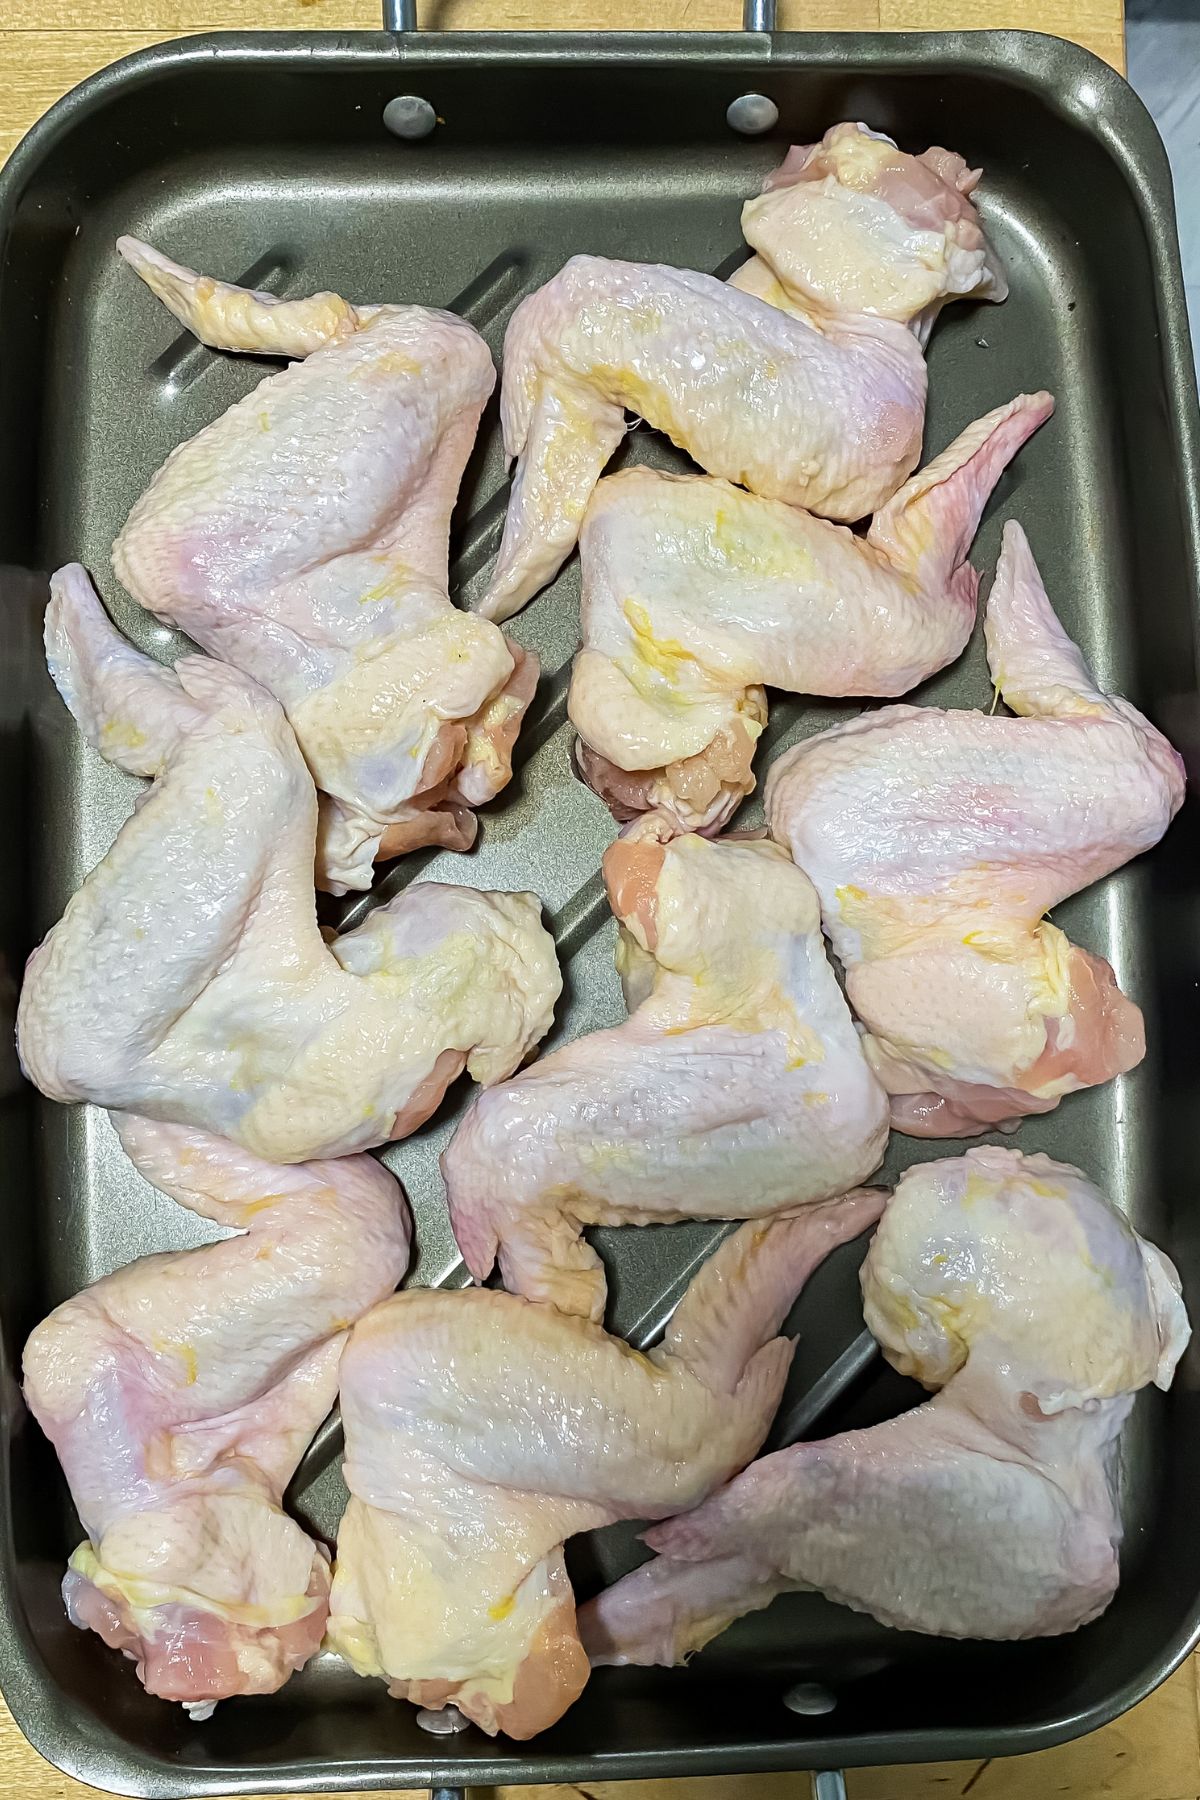 raw chicken wings on a baking sheet